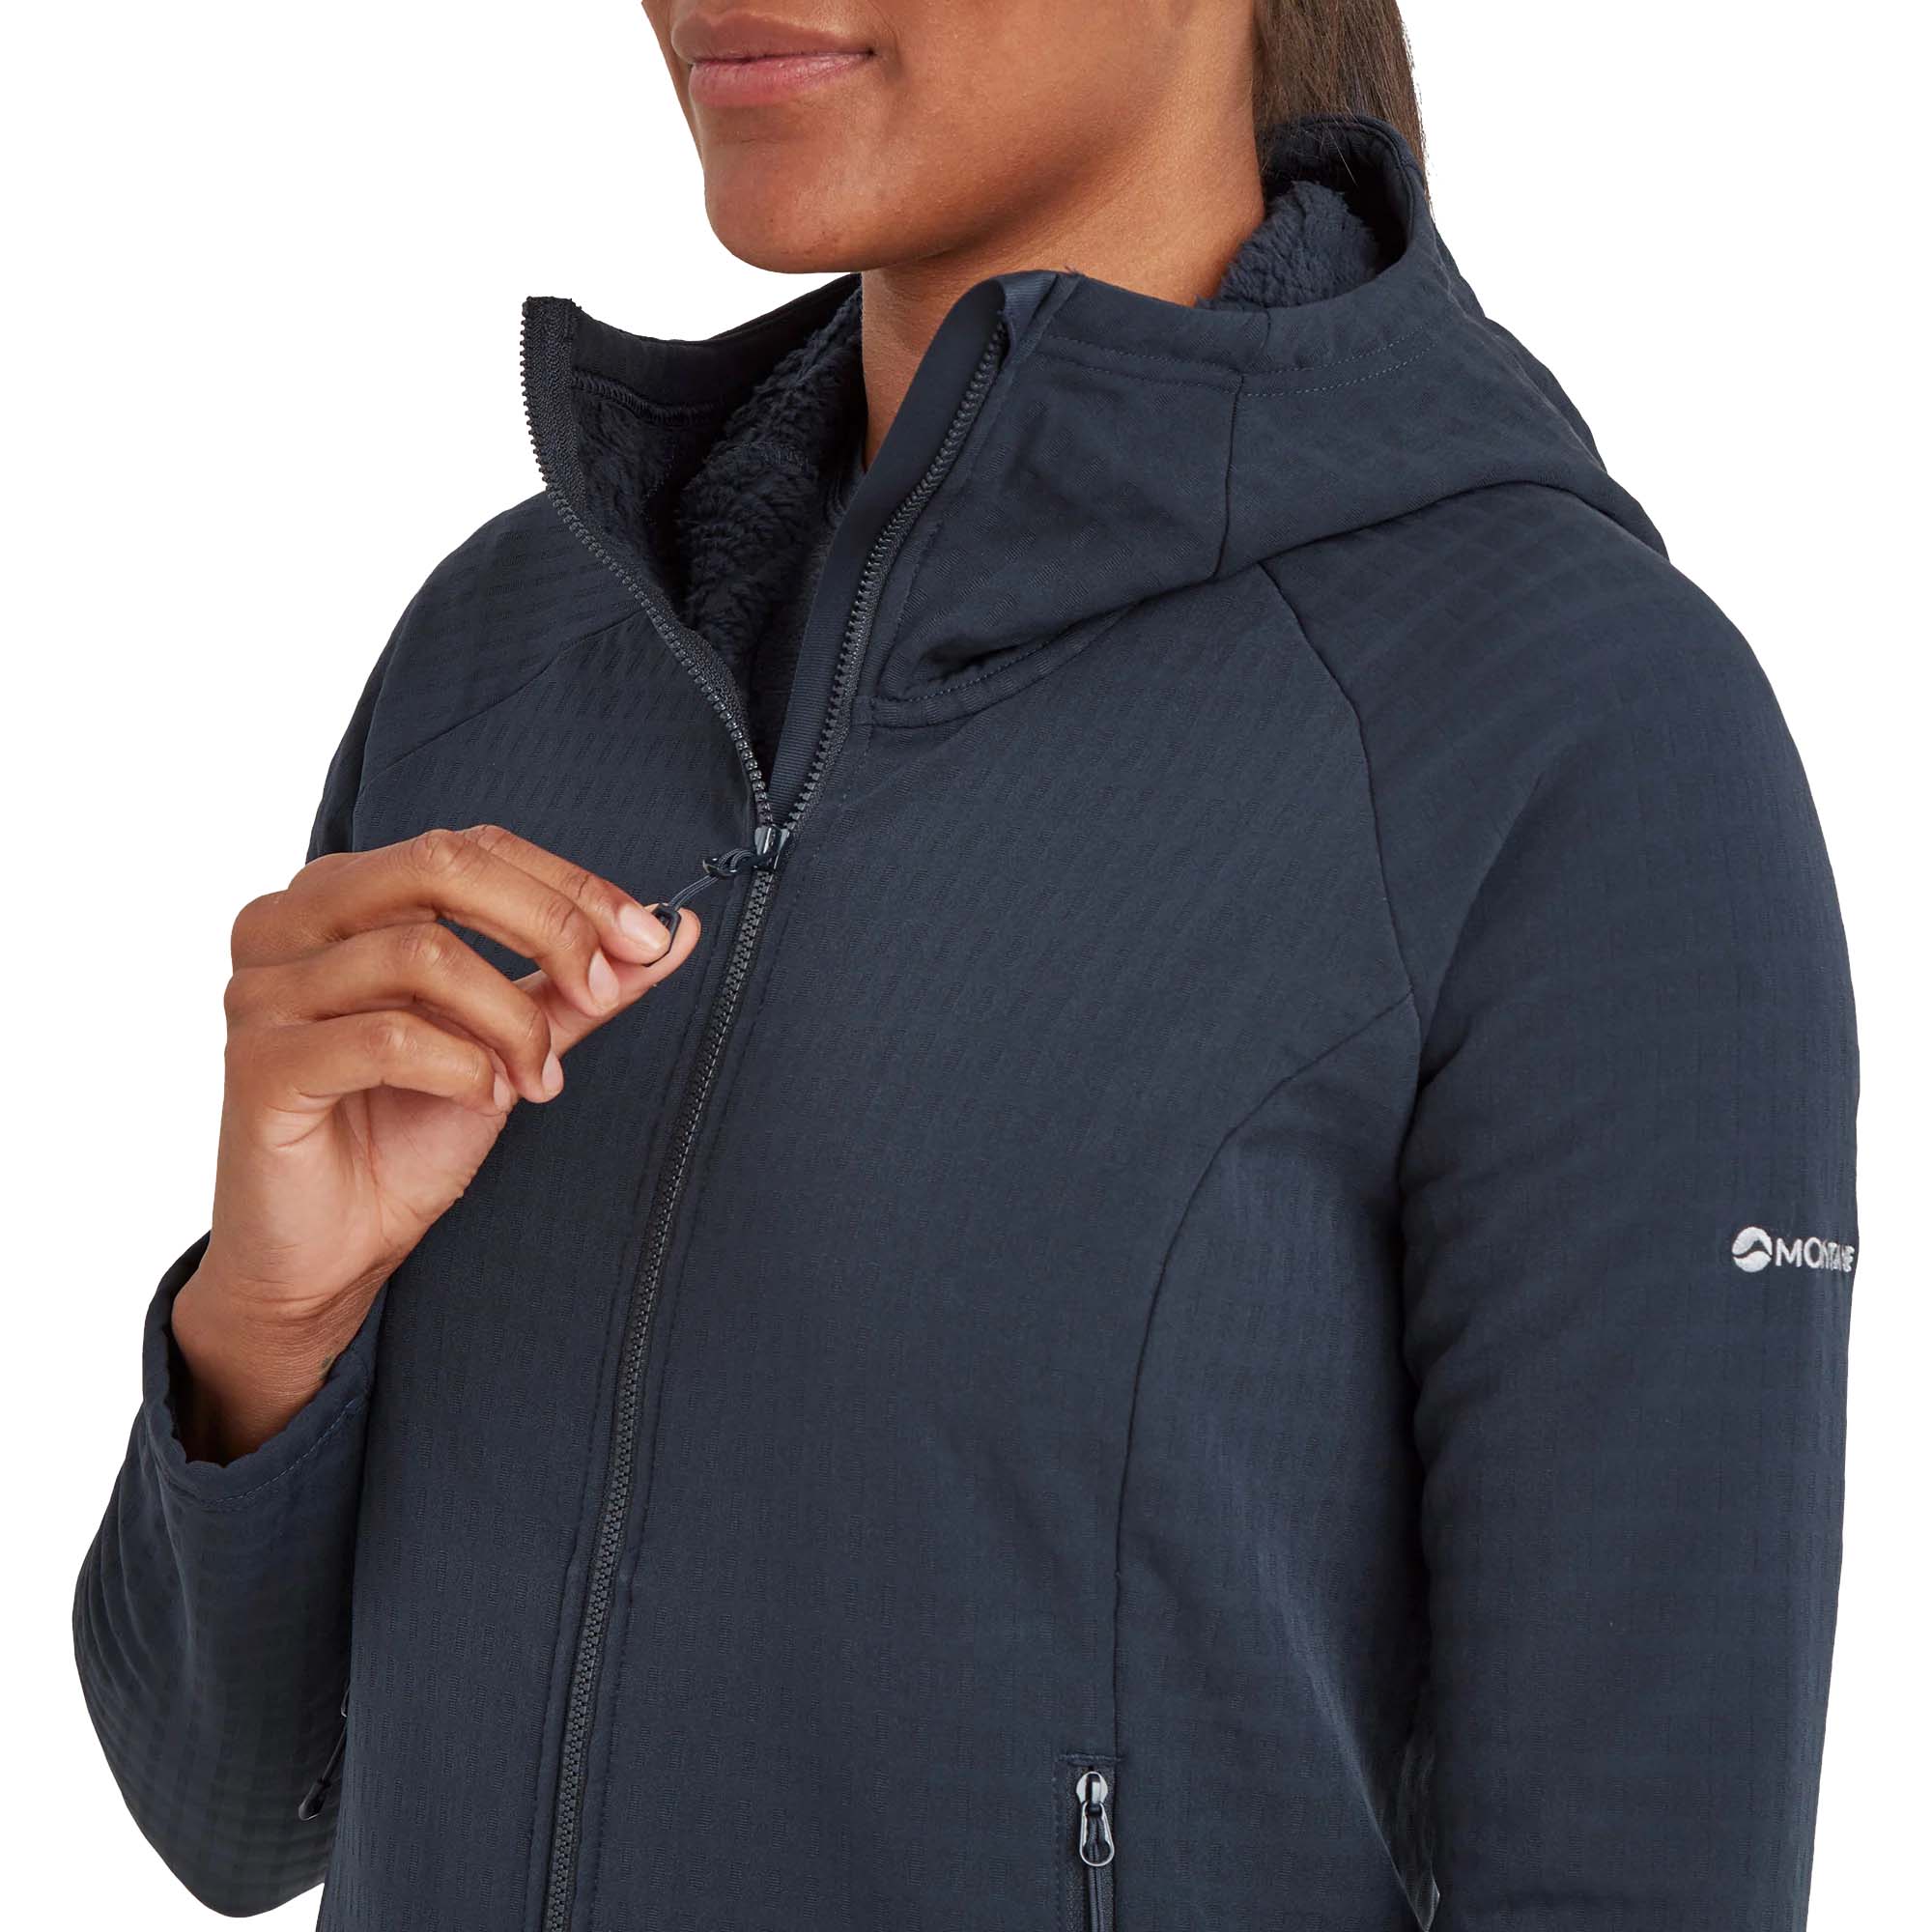 Montane Protium XT Women's Technical Hooded Jacket